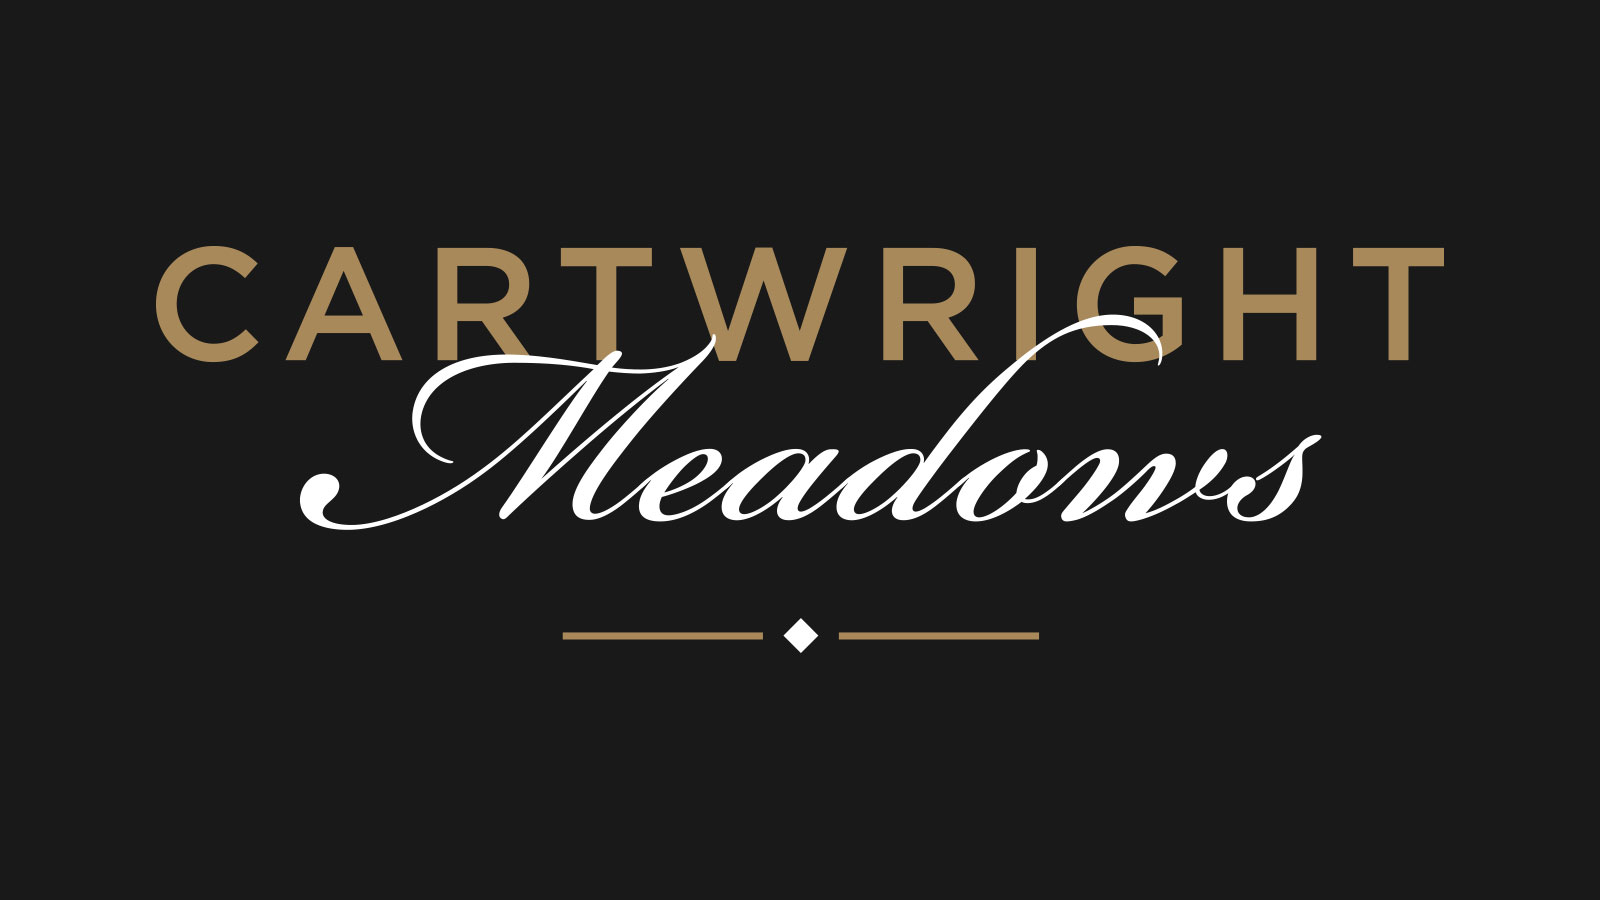 Cartwright Meadows